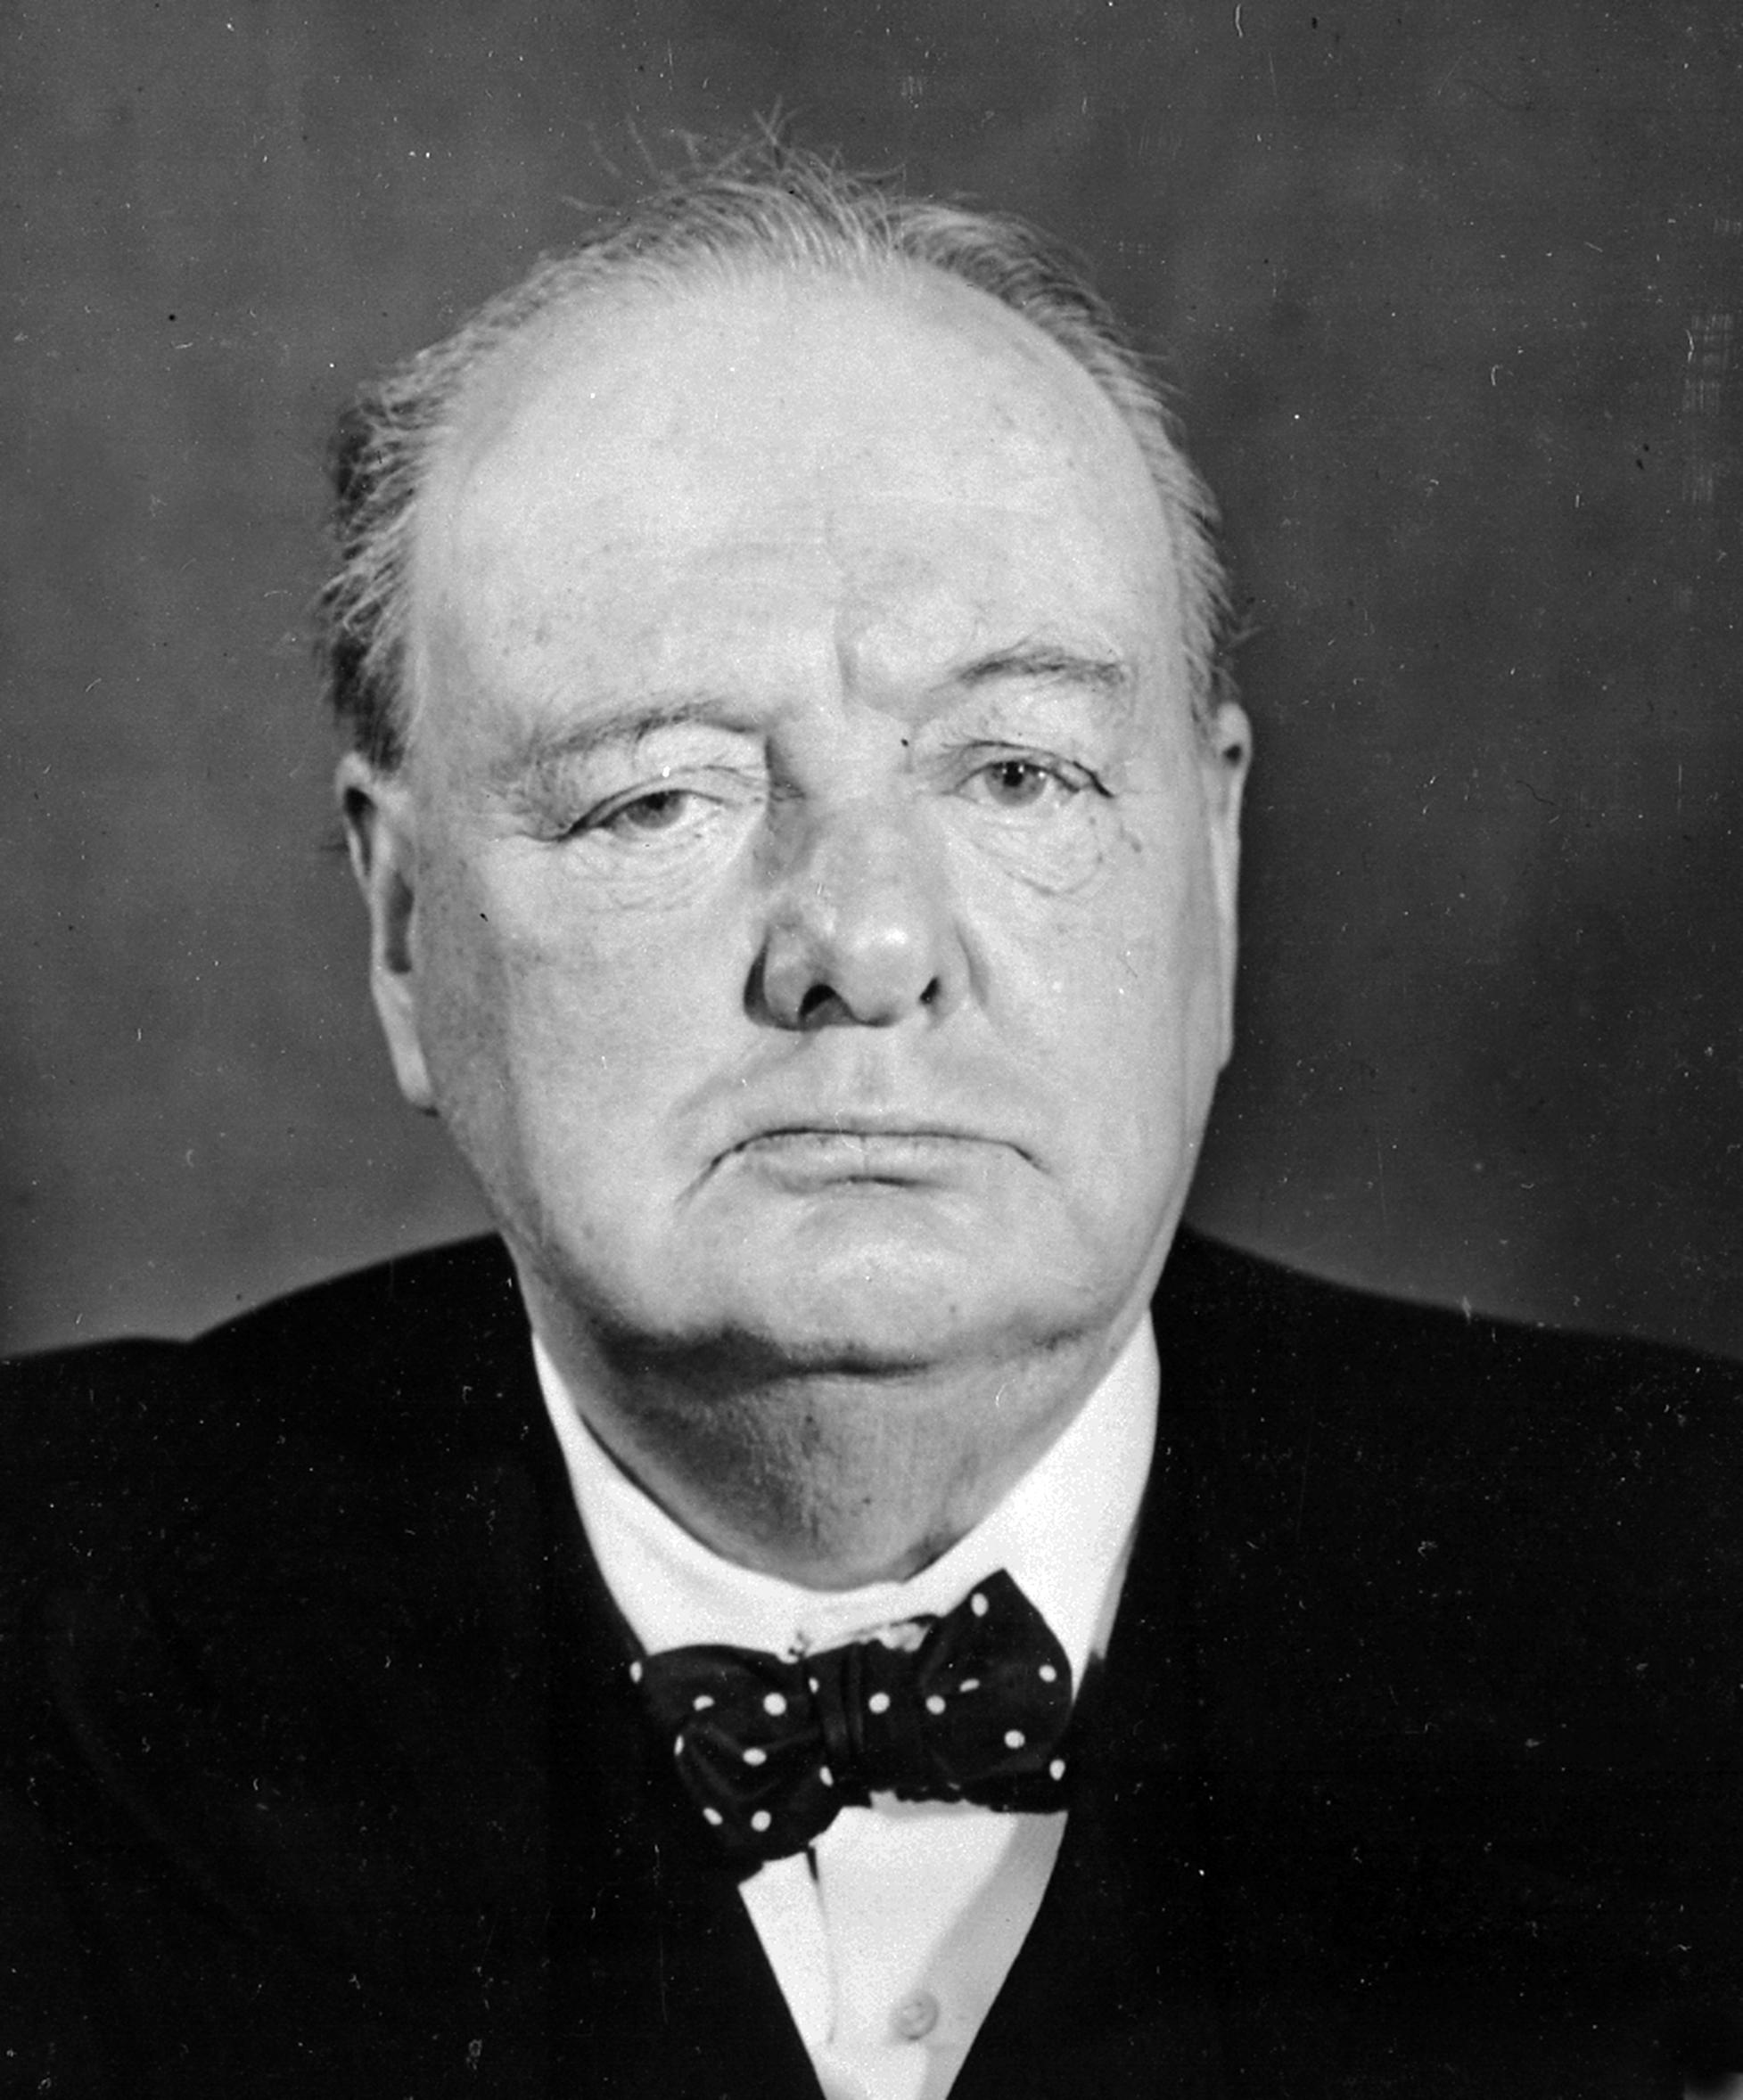 Winston Churchill, 1874-1965